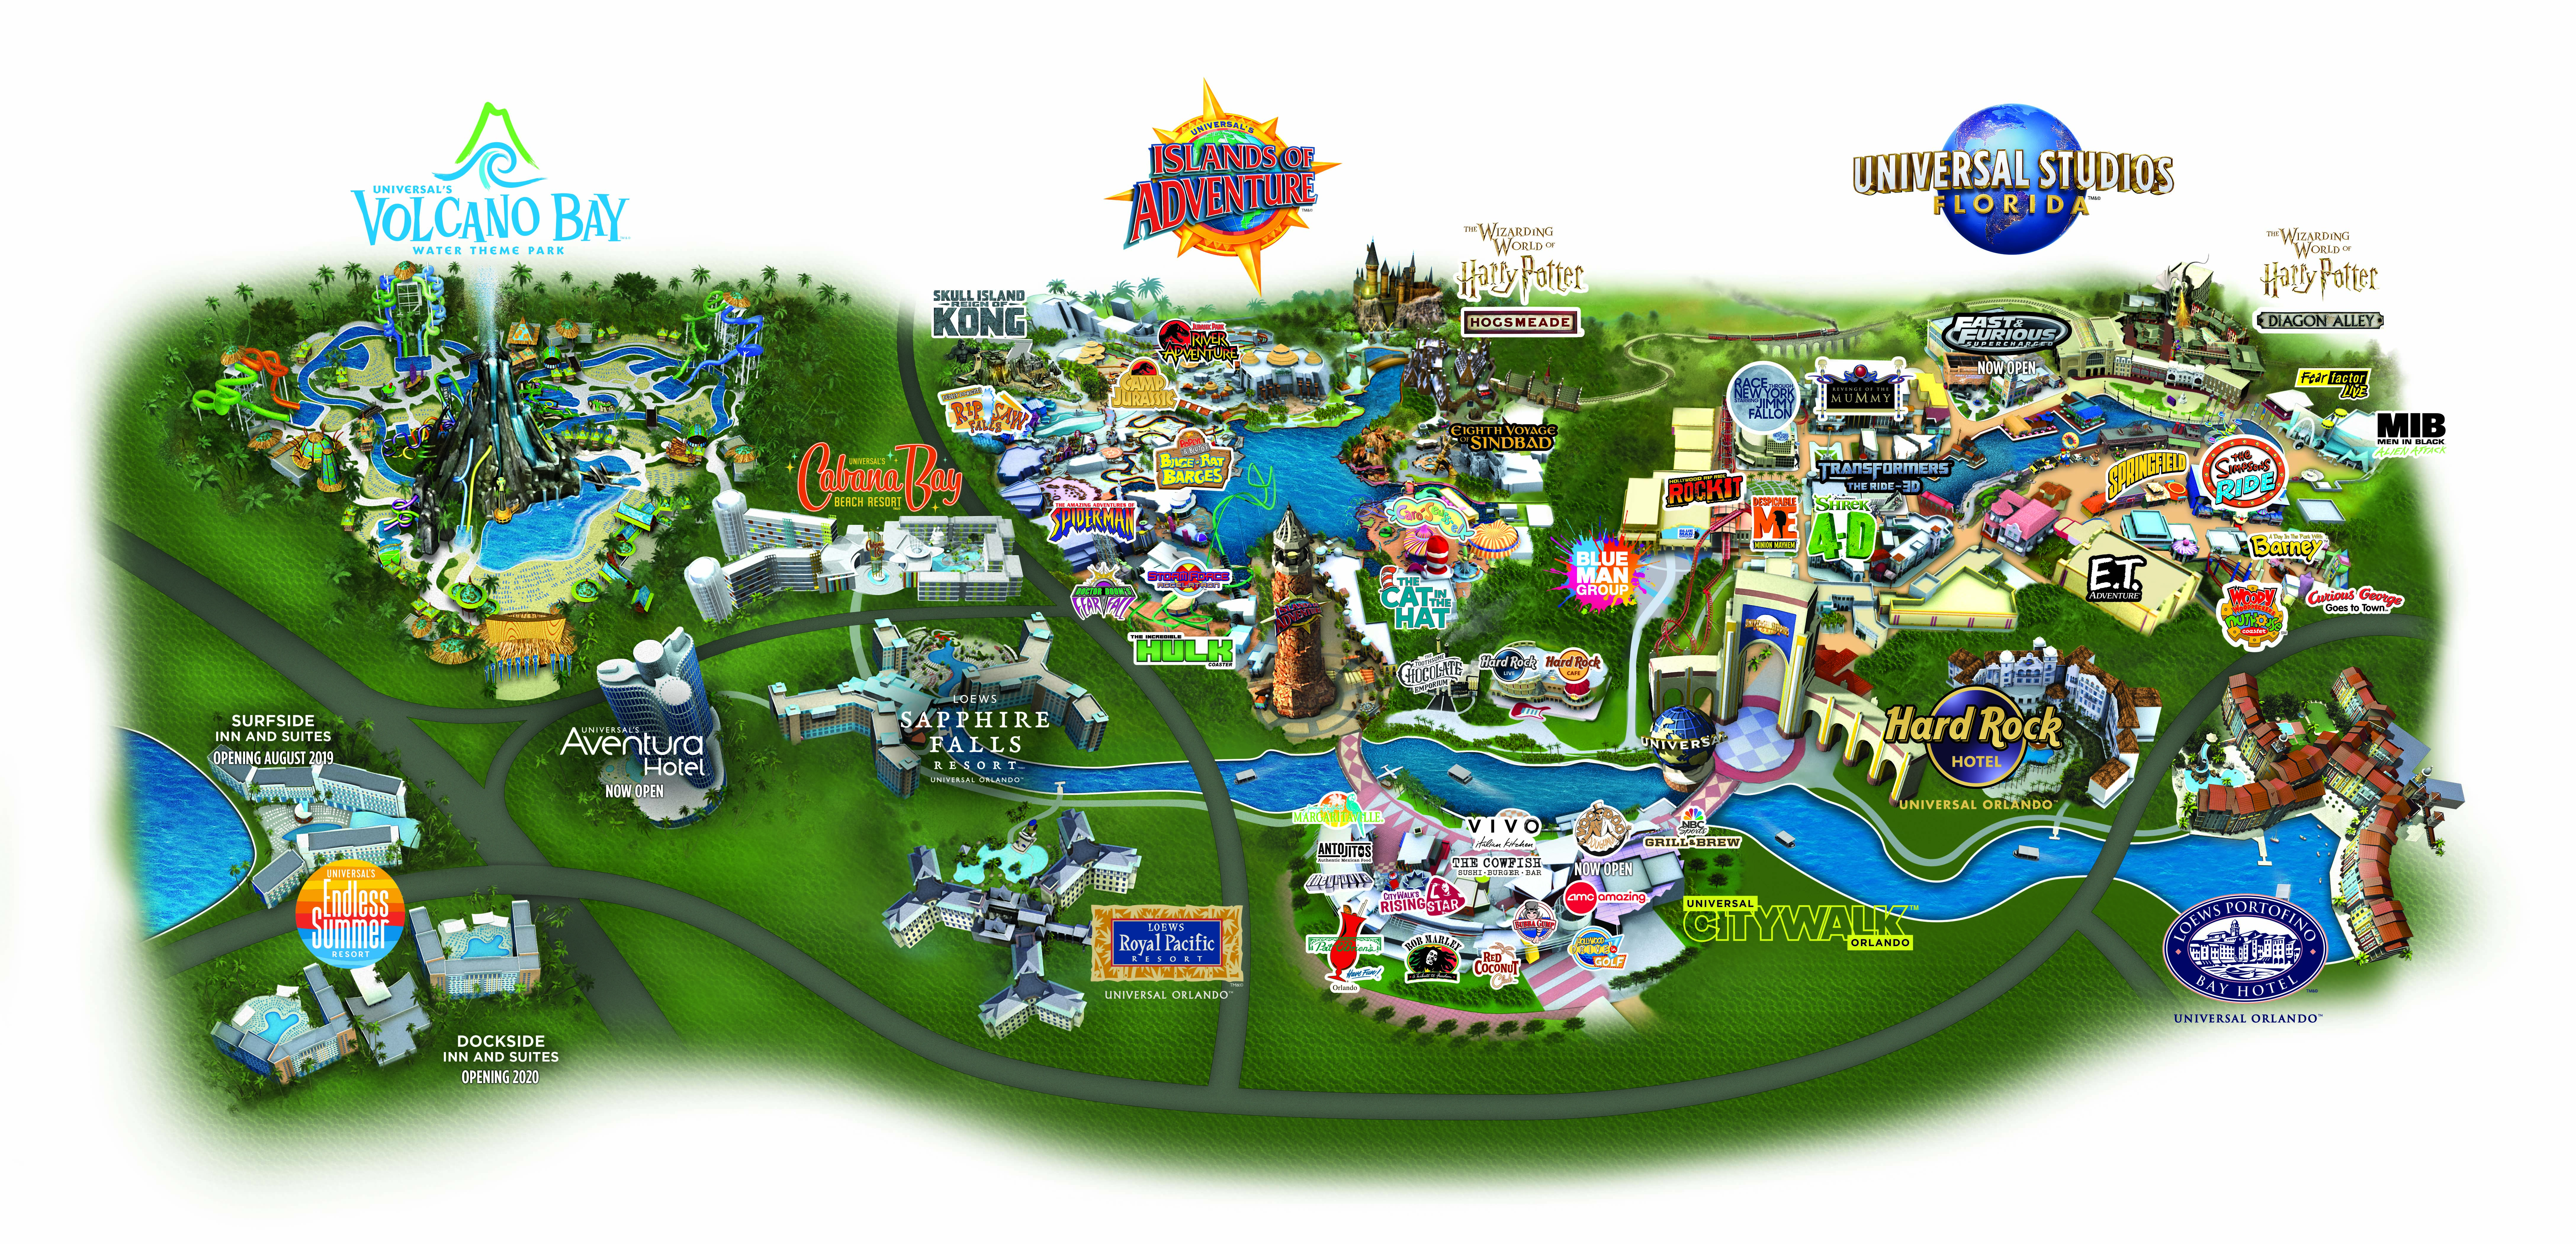 Universal Orlando Resort Theme Park Tickets